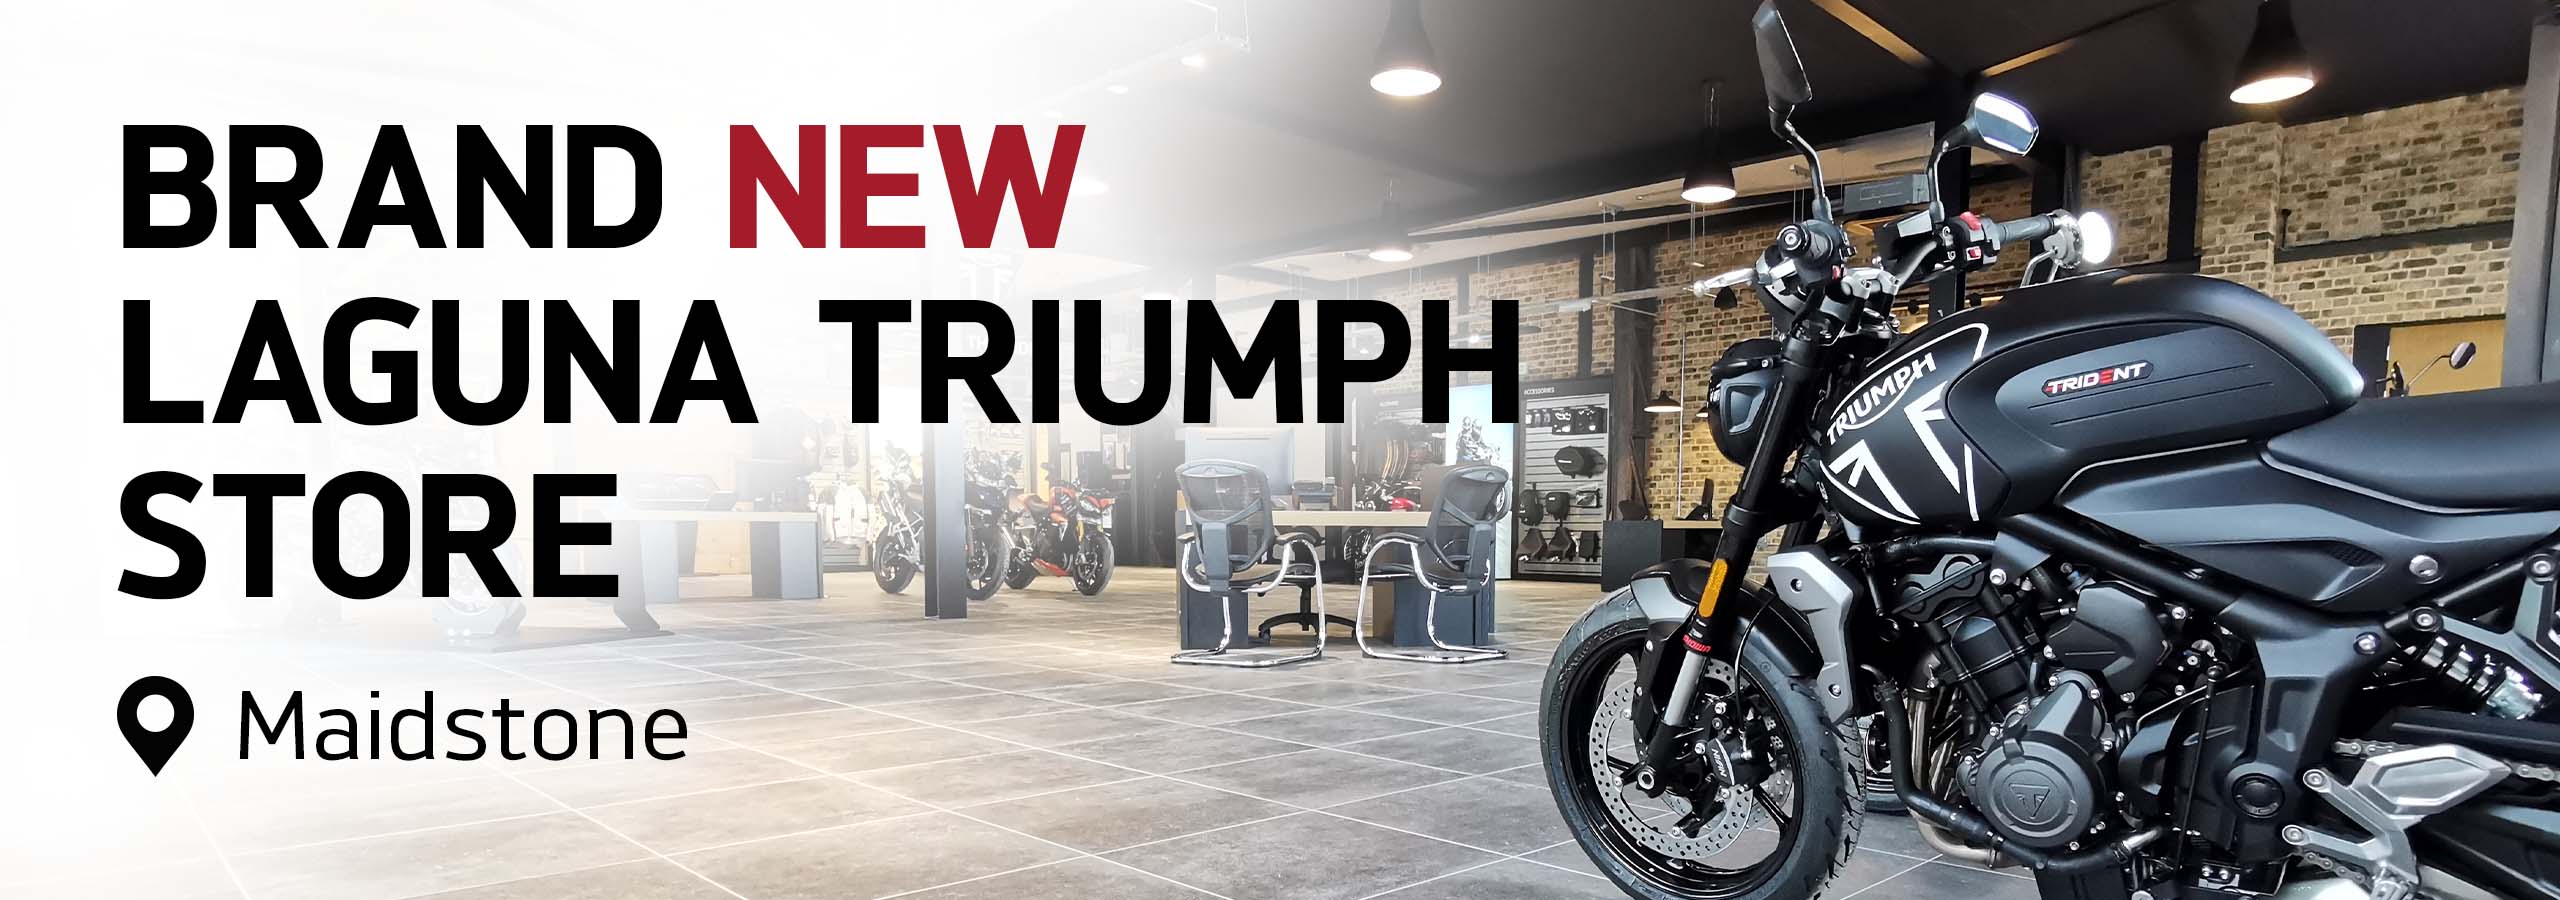 New Laguna Triumph store in Maidstone opens today!